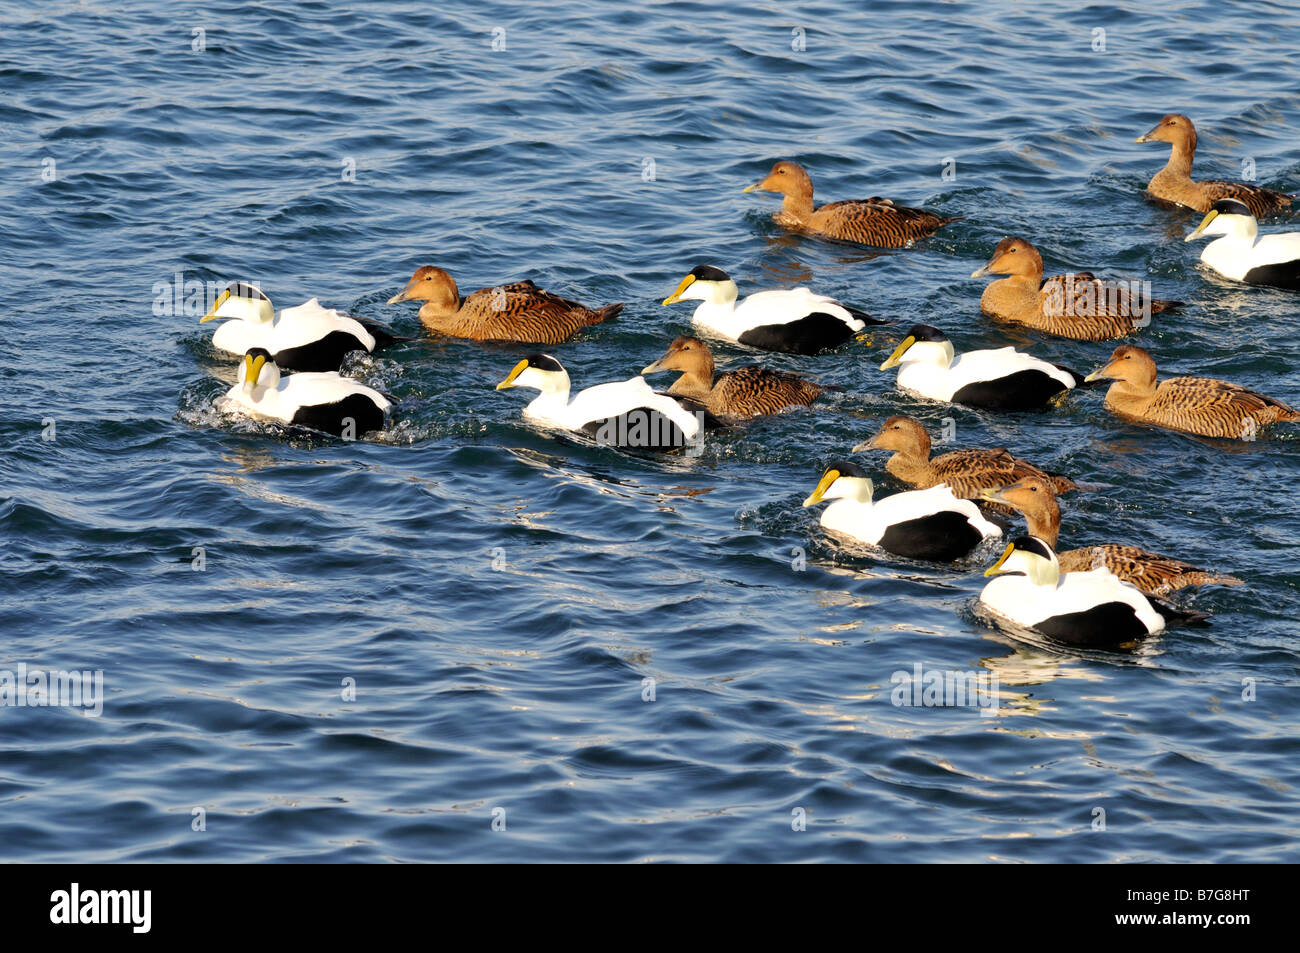 Flock of Common Eider ducks swimming in ocean Stock Photo